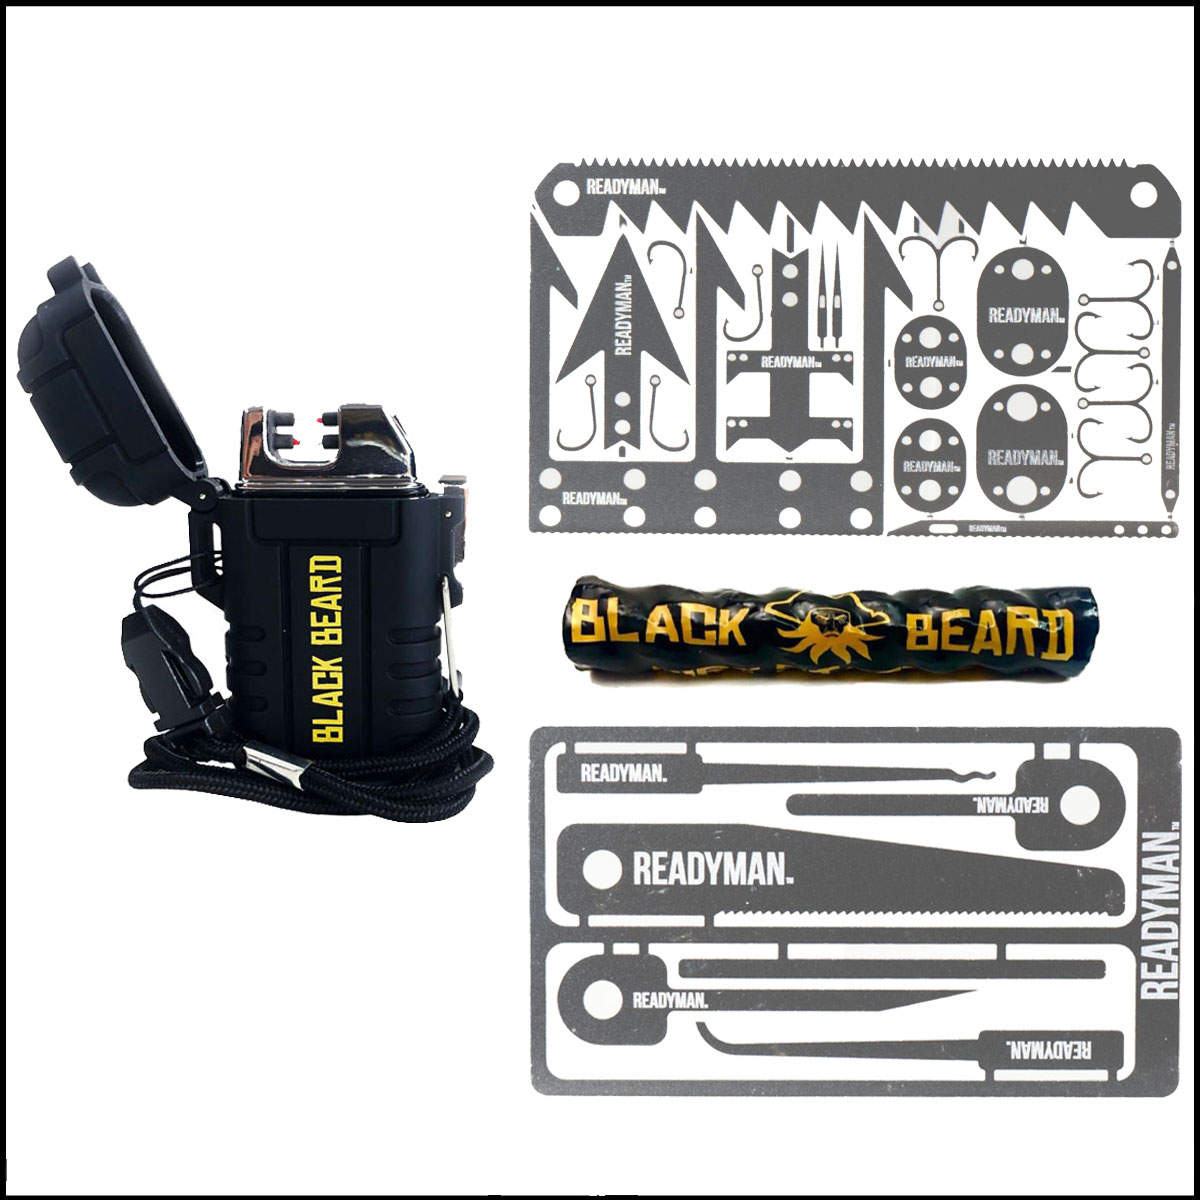 Tactical Gift Box: Ready Man Hostage Escape Card  + Ready Man Wilderness Survival Card  + Black Beard Arc Lighter + Black Beard Fire Starter